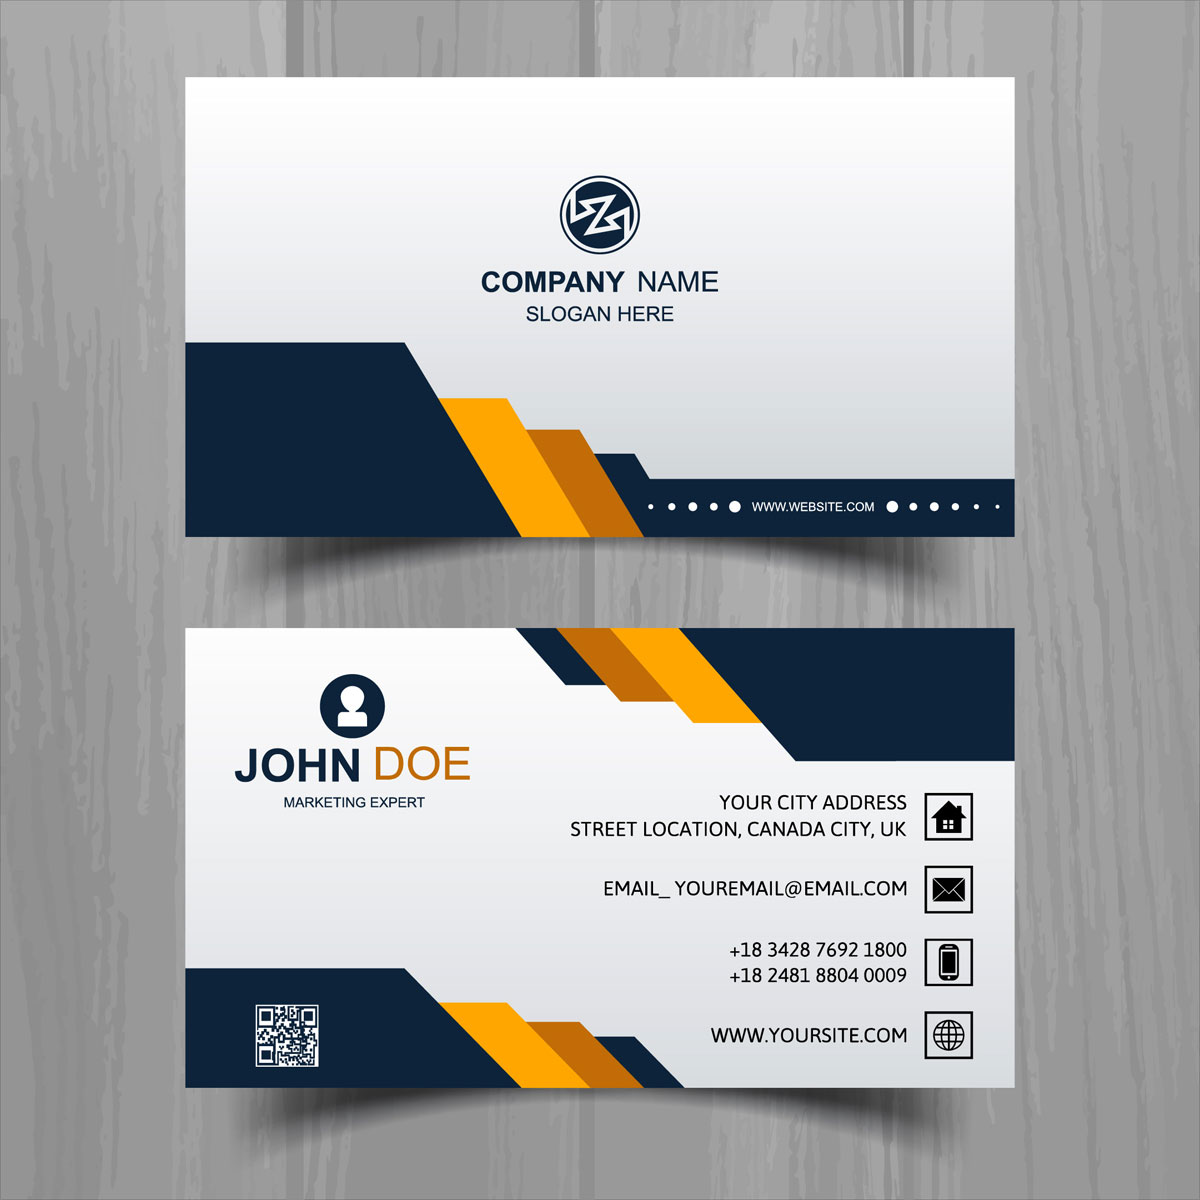 Professional & Unique Business Card Design For Your Business